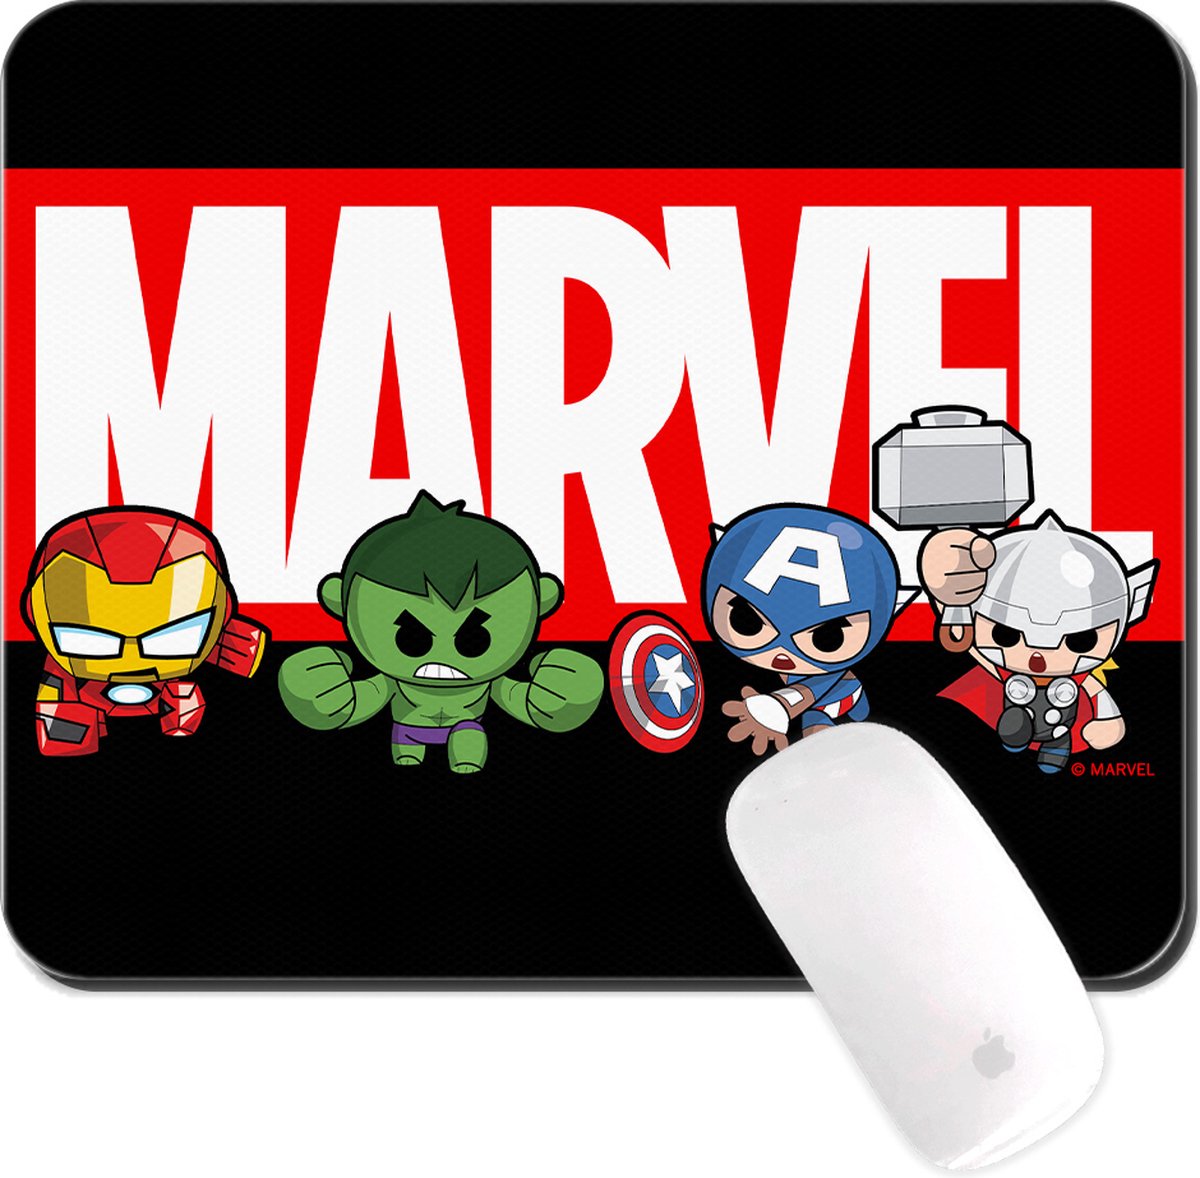 Marvel Avengers - Muismat 22x18cm 3mm dik